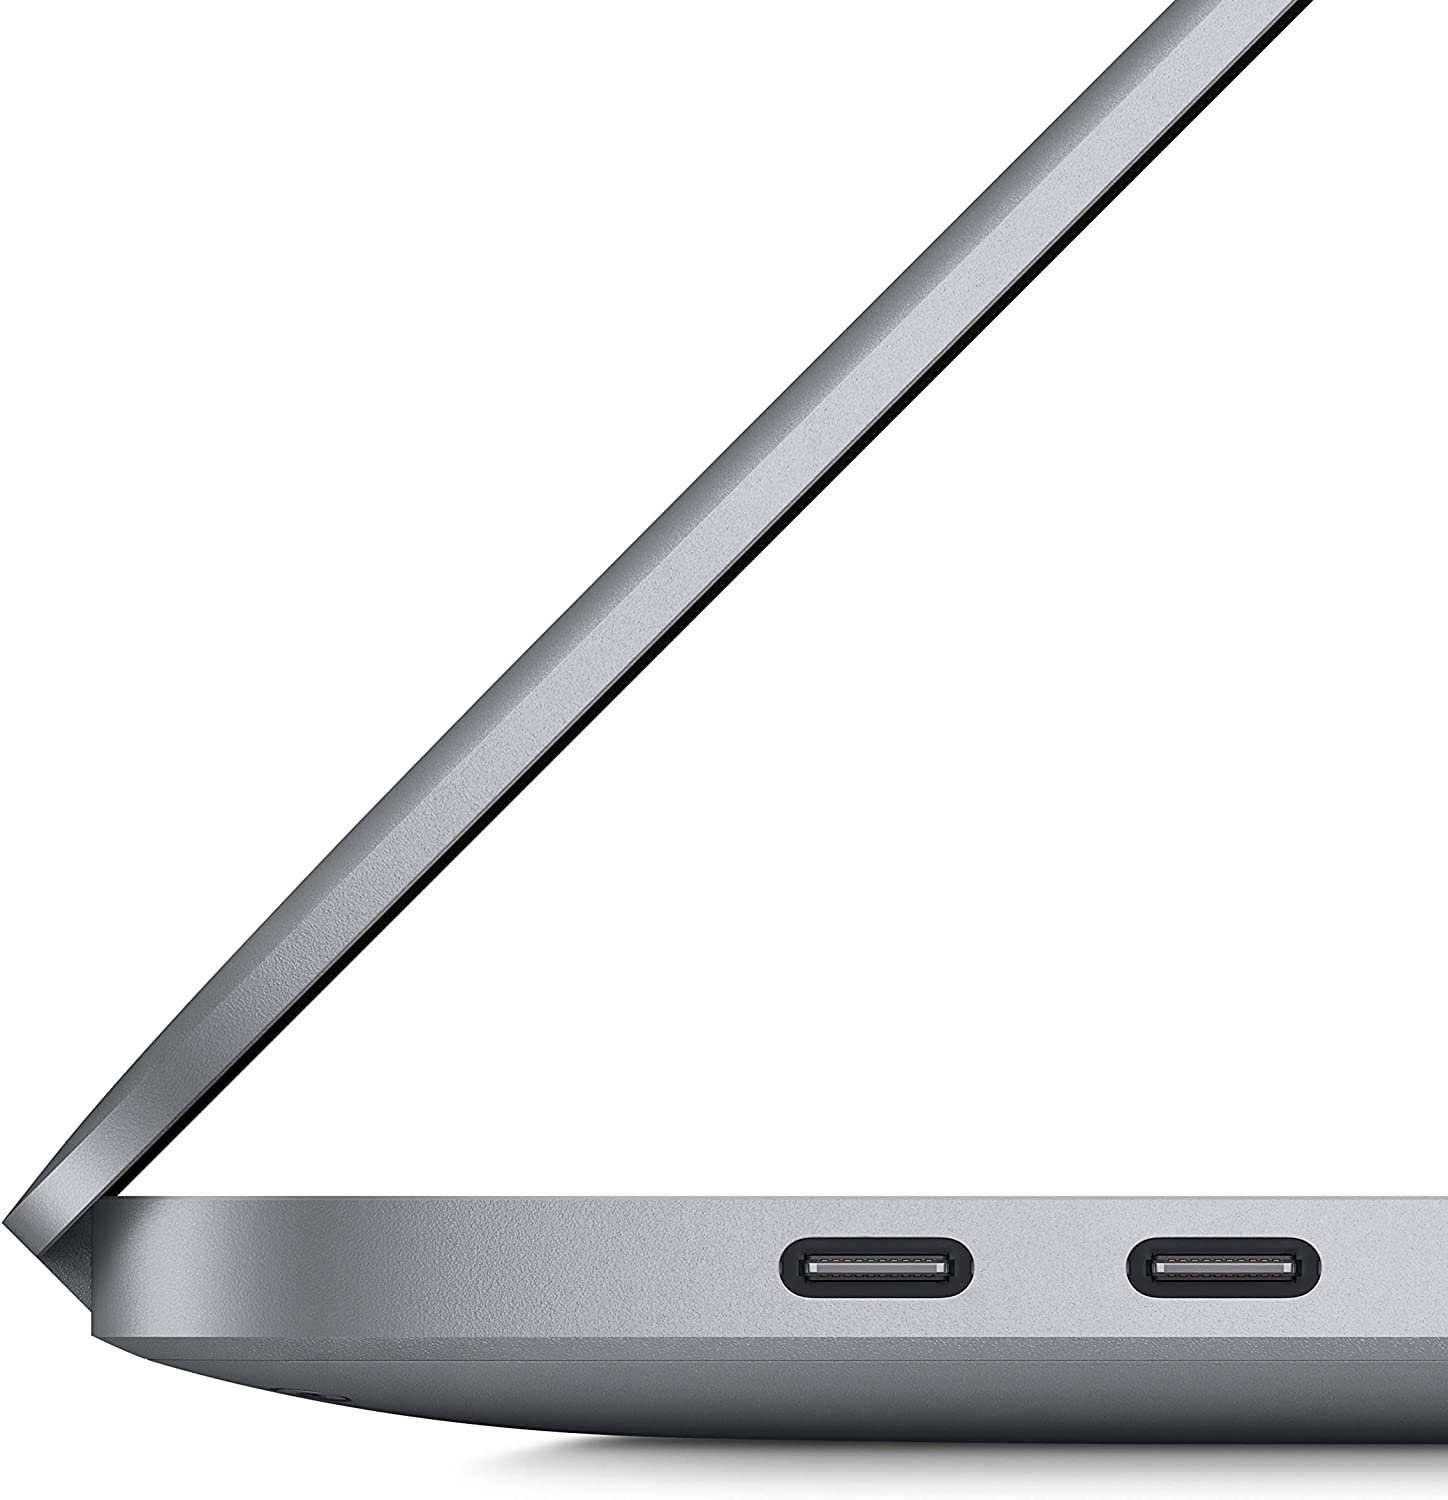 Apple MacBook Pro 16" 3072 x 1920 HD Display Intel Core i7 2.6 GHz 32GB Ram 512GB SSD (Z0XZ004R9) Space Gray (Renewed)